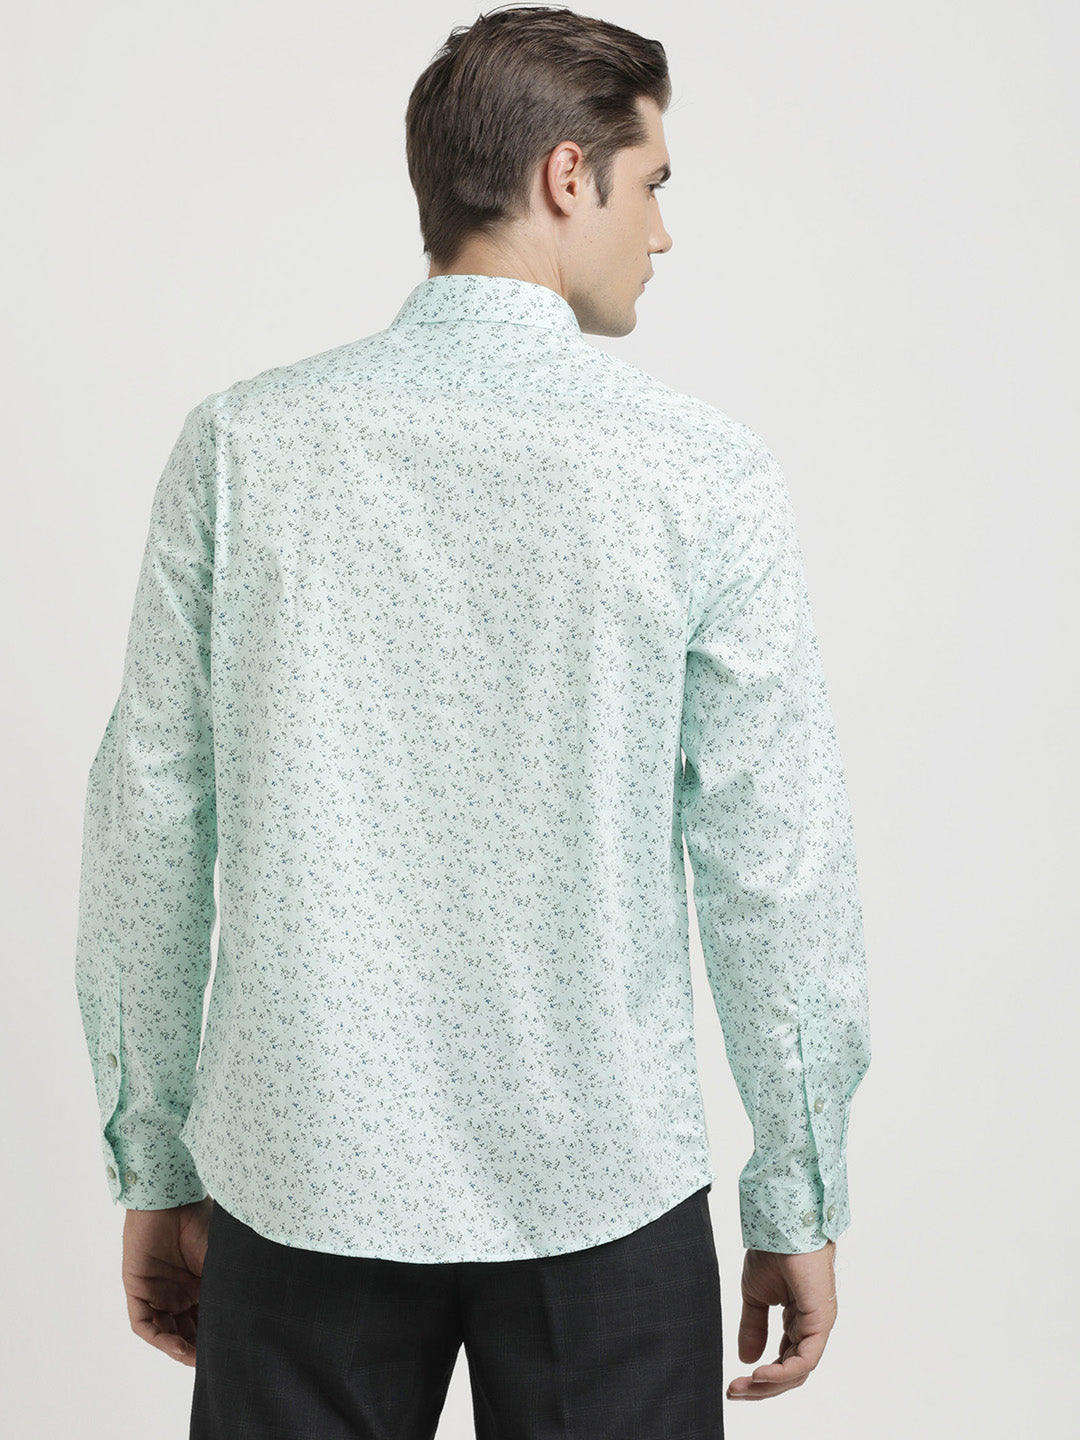 100% Cotton Green Printed Slim Fit Full Sleeve Formal Shirt